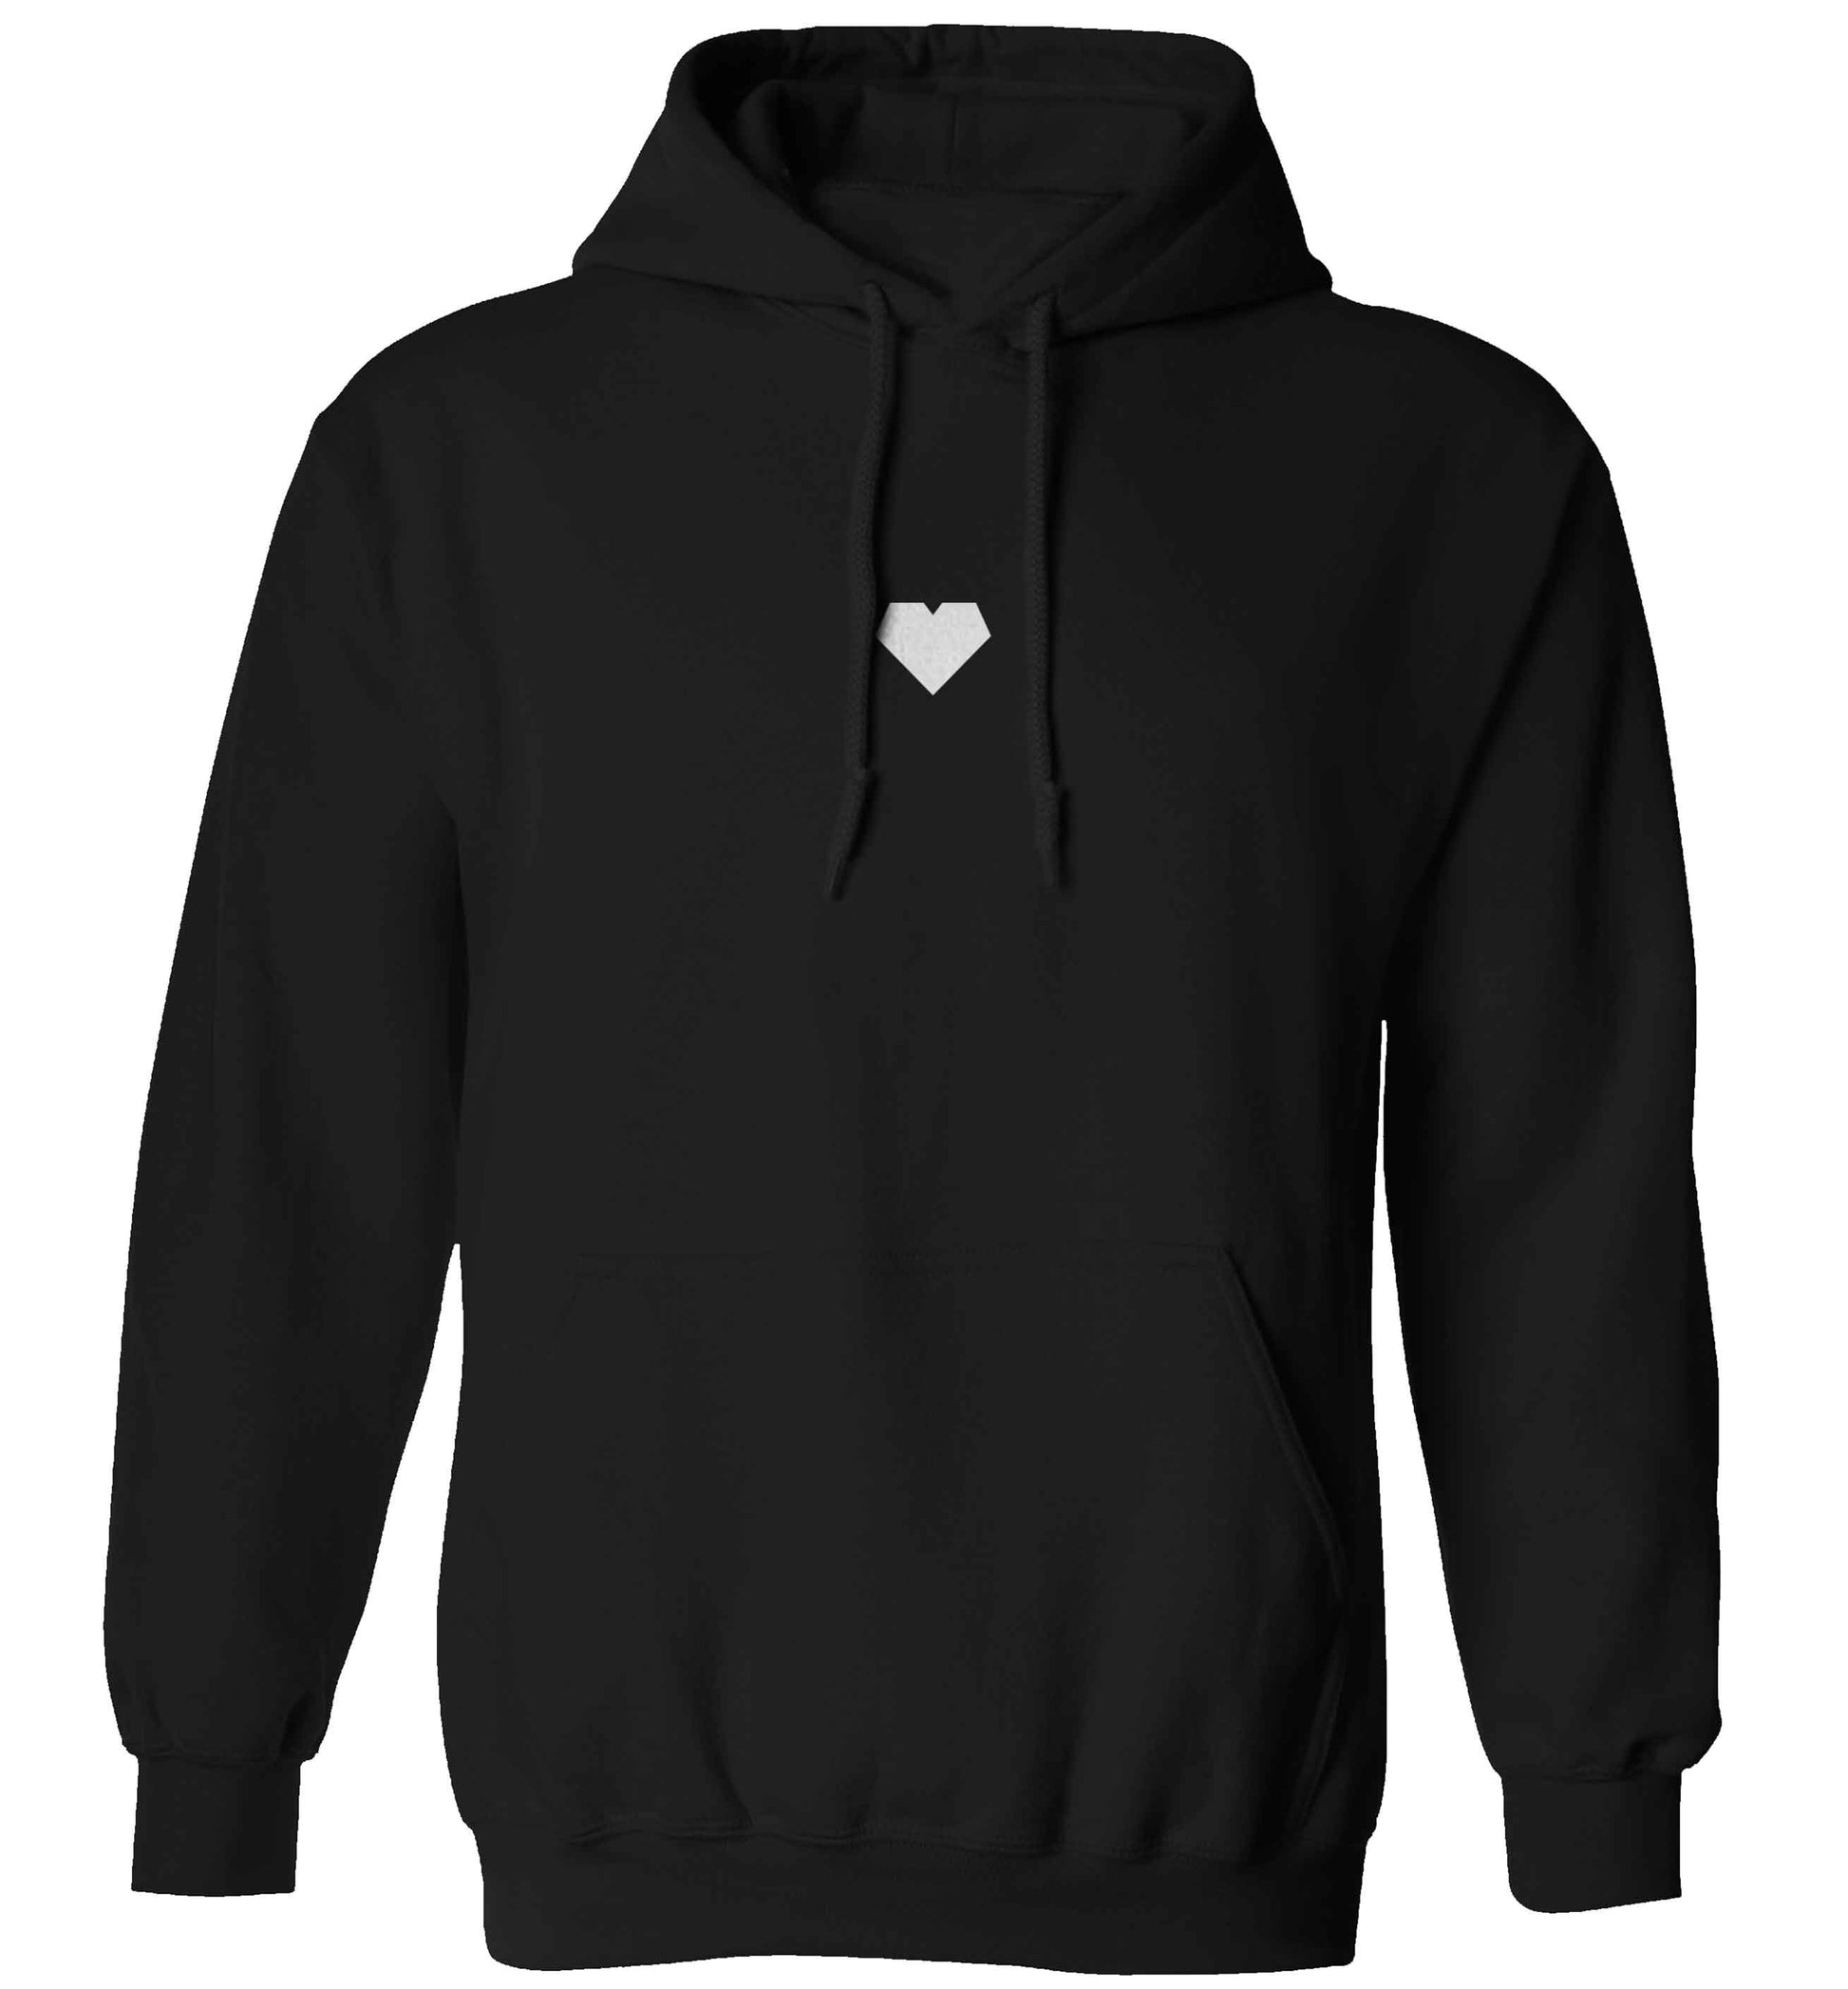 Tiny heart adults unisex black hoodie 2XL